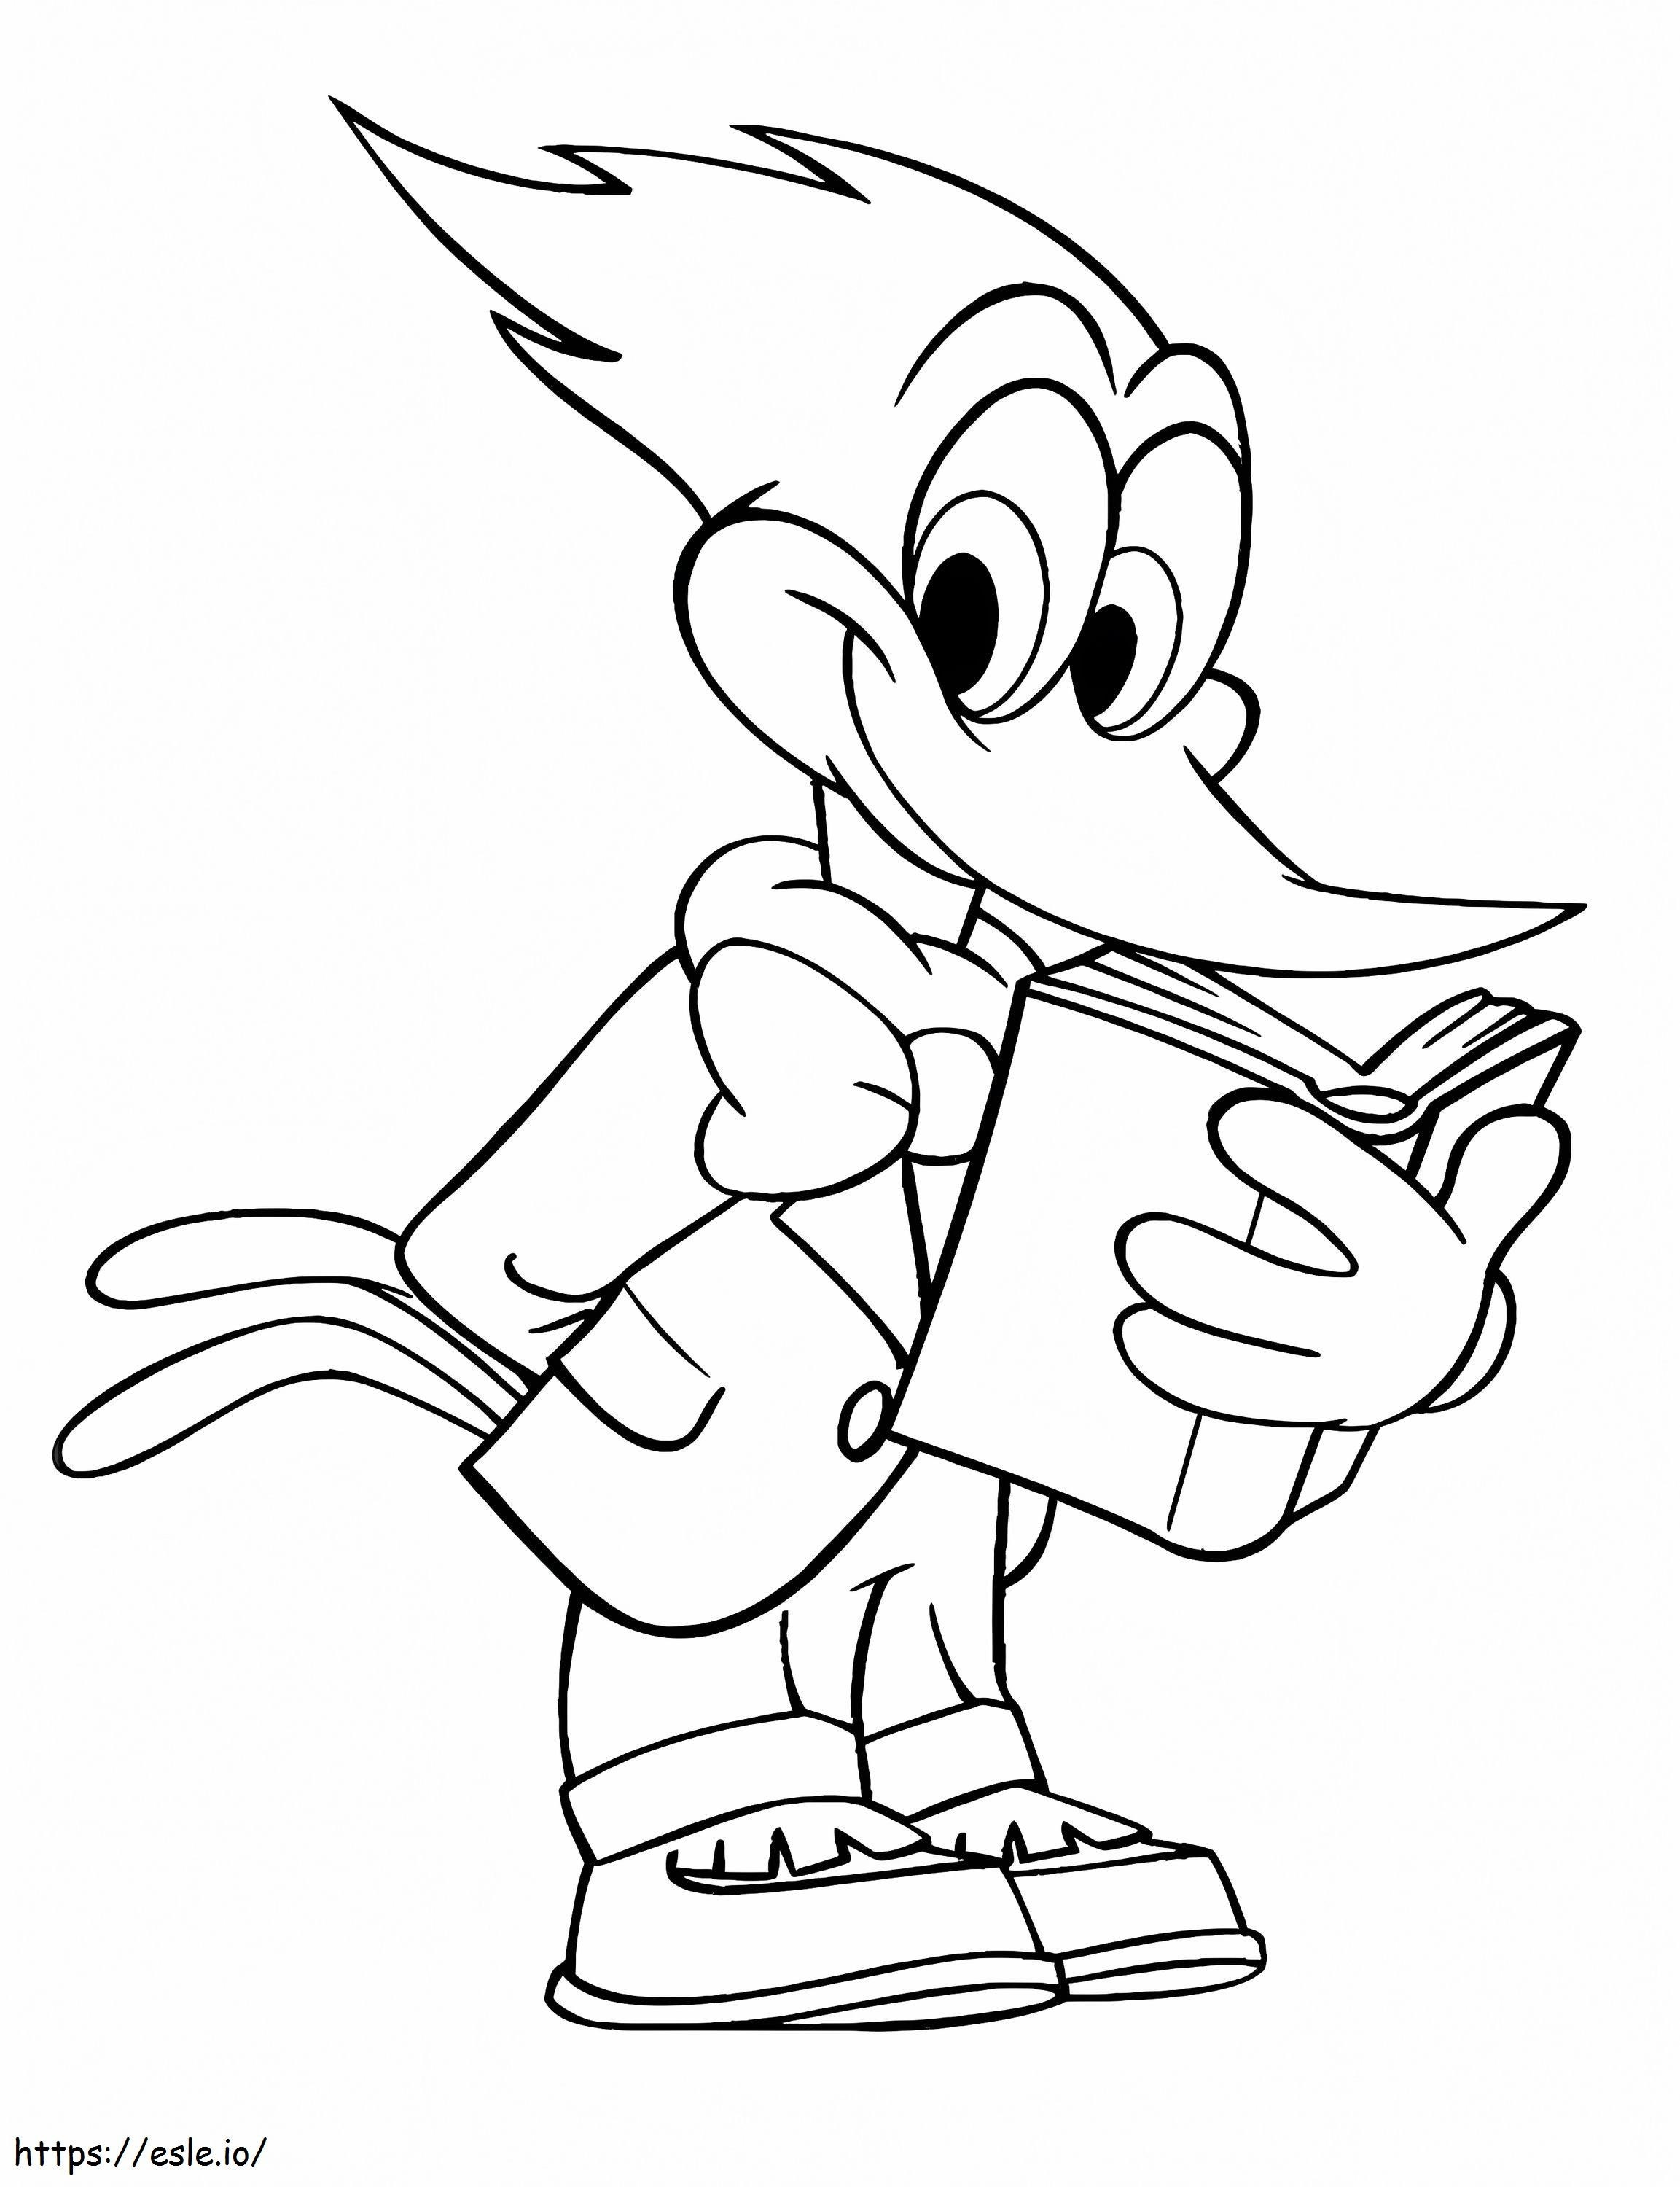 Woody Woodpecker-Lesung ausmalbilder